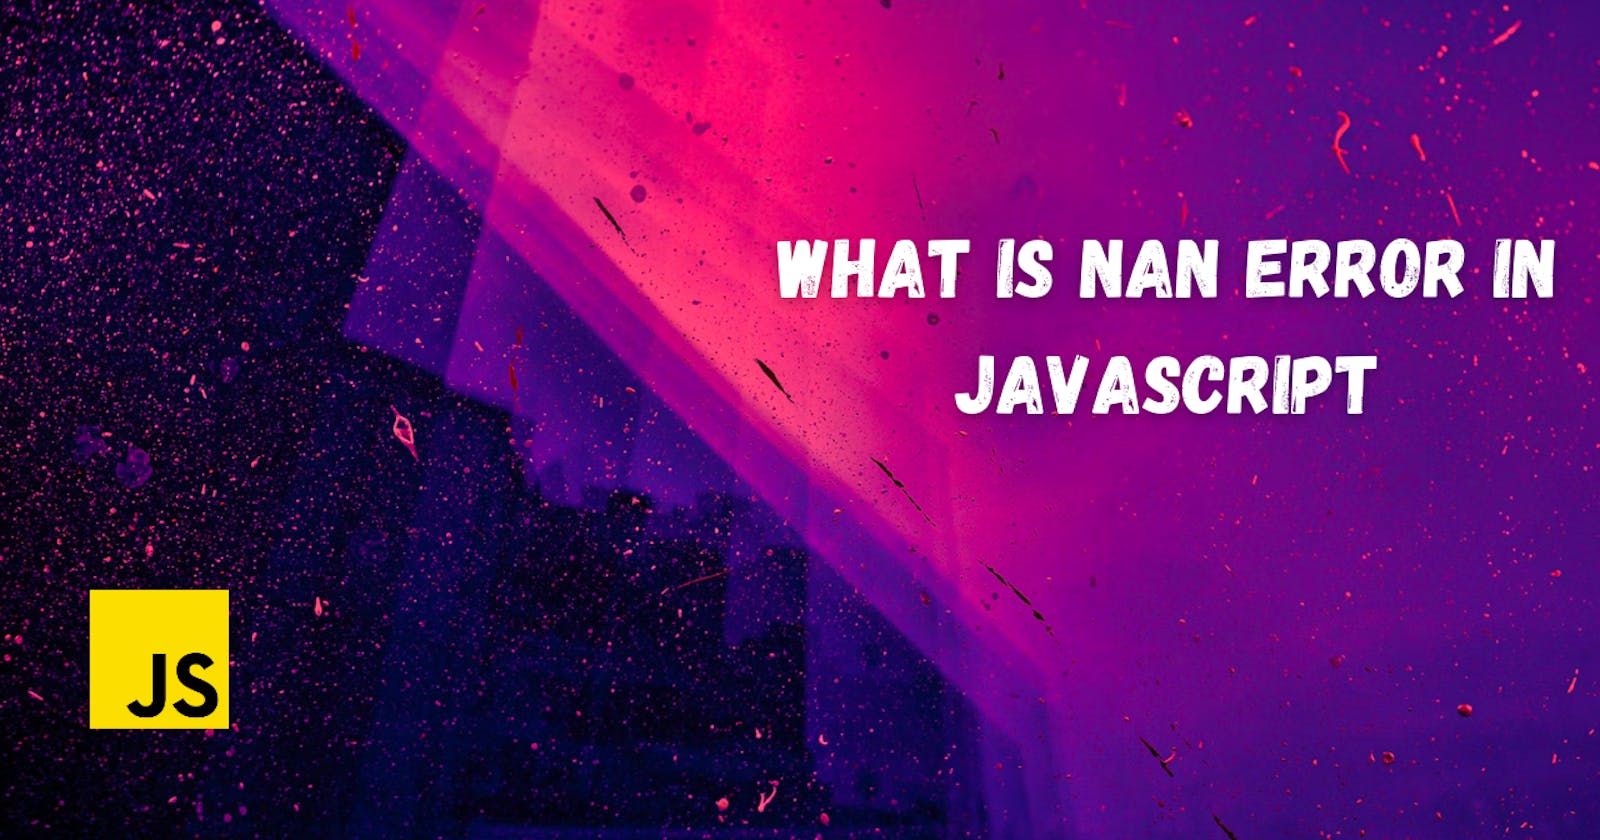 What is an NaN error in JavaScript?